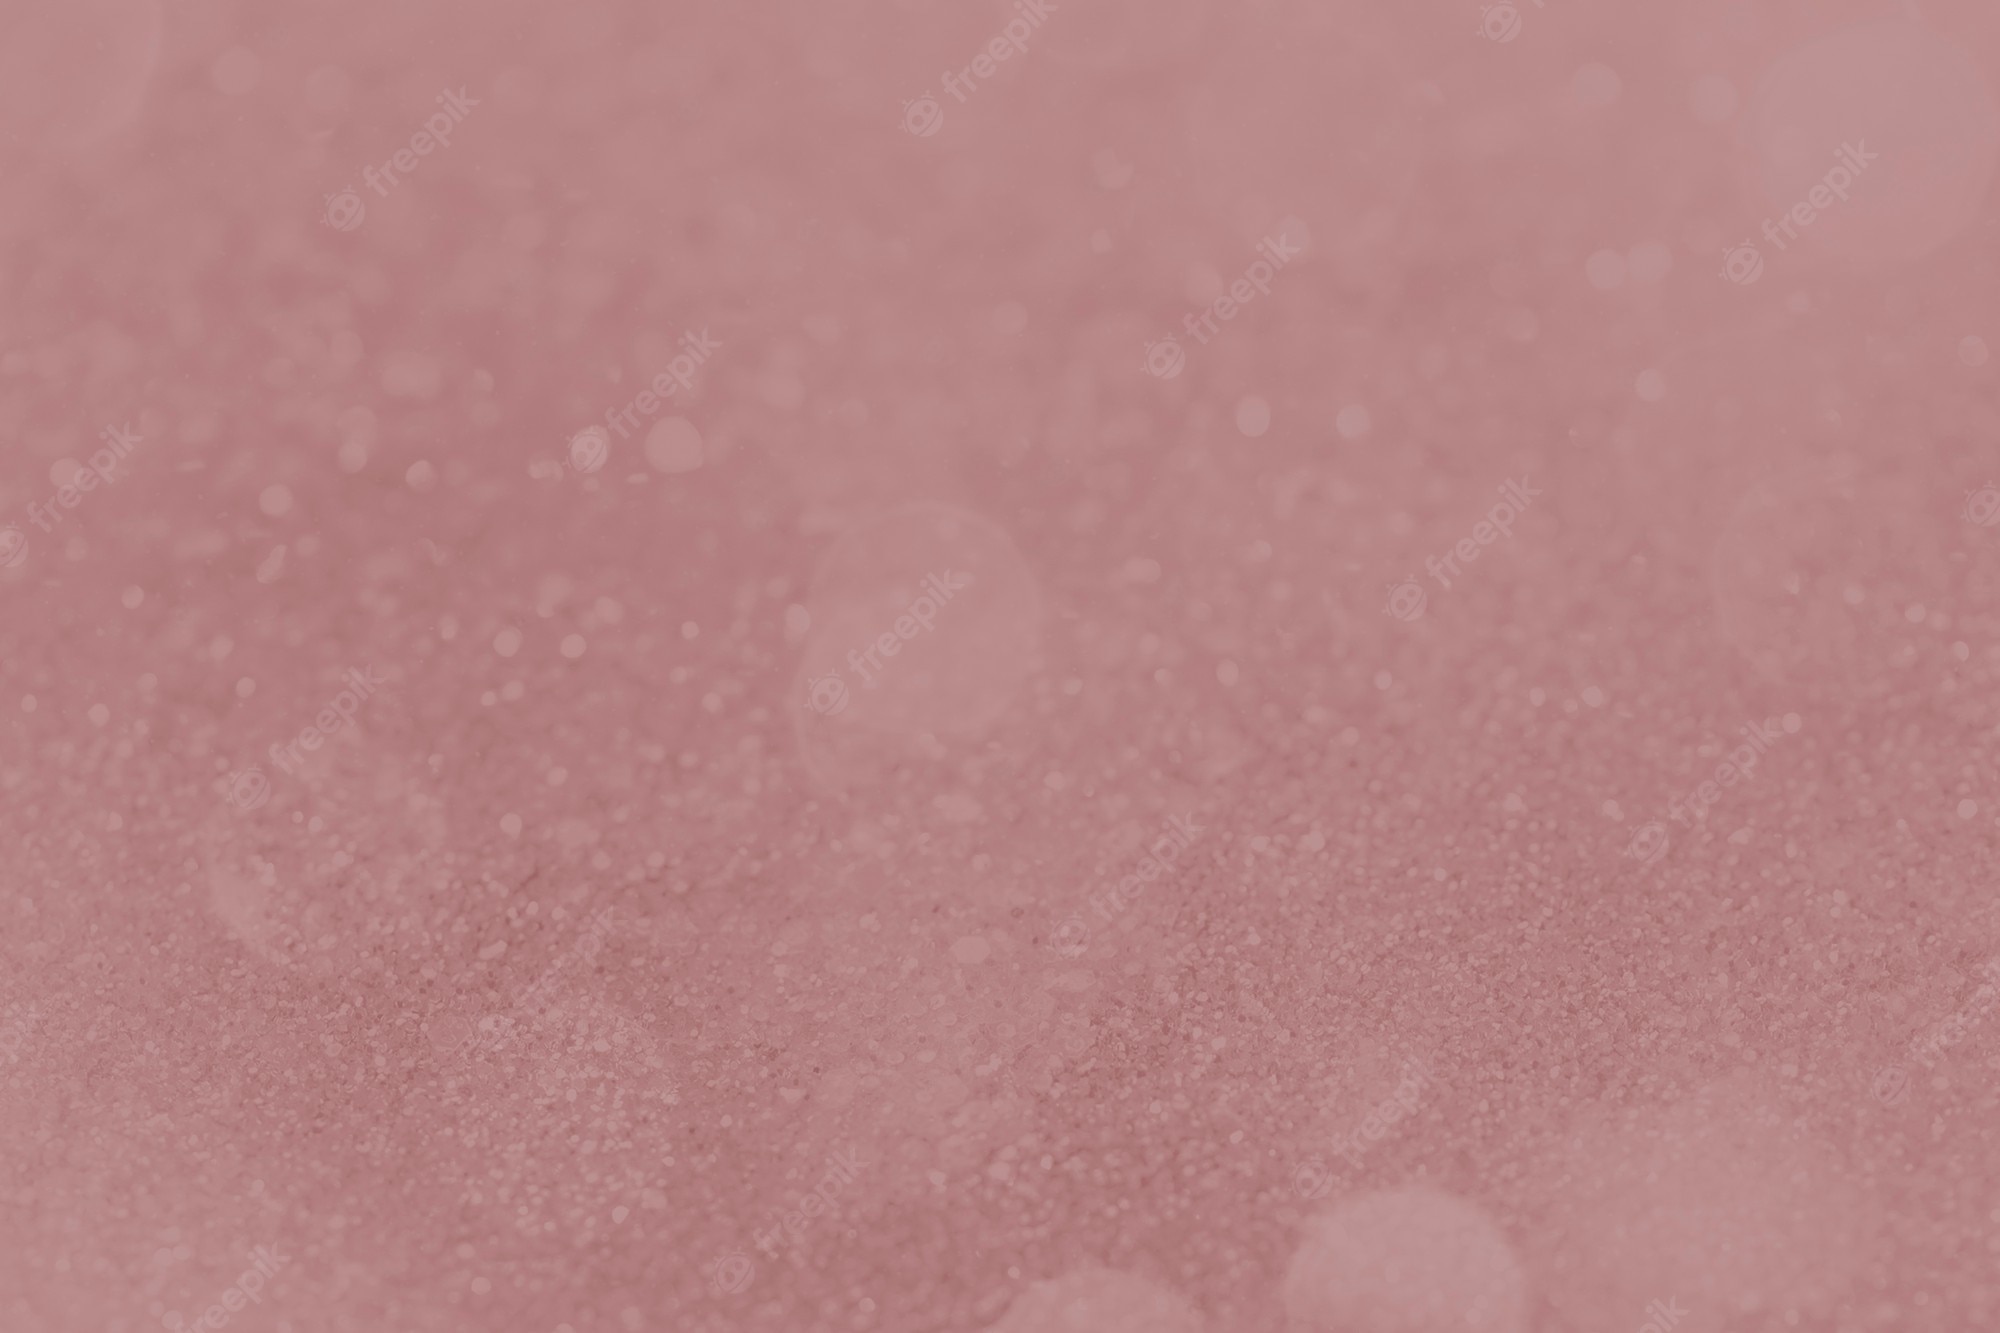 Premium Photo. Bokeh background in dark dusty pink